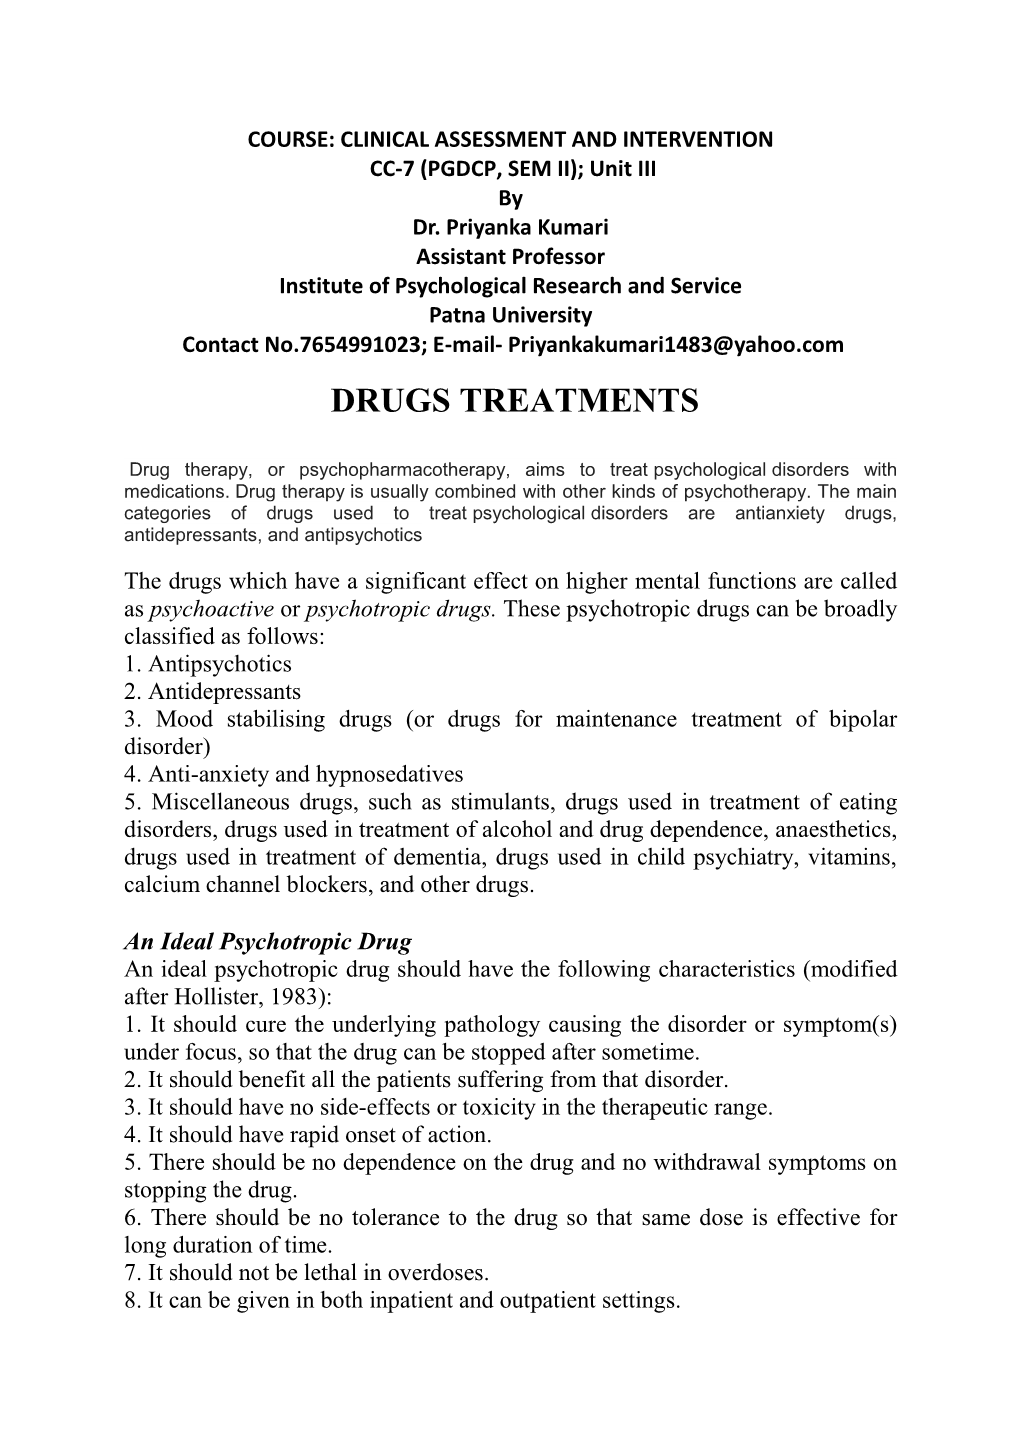 Drugs Treatments